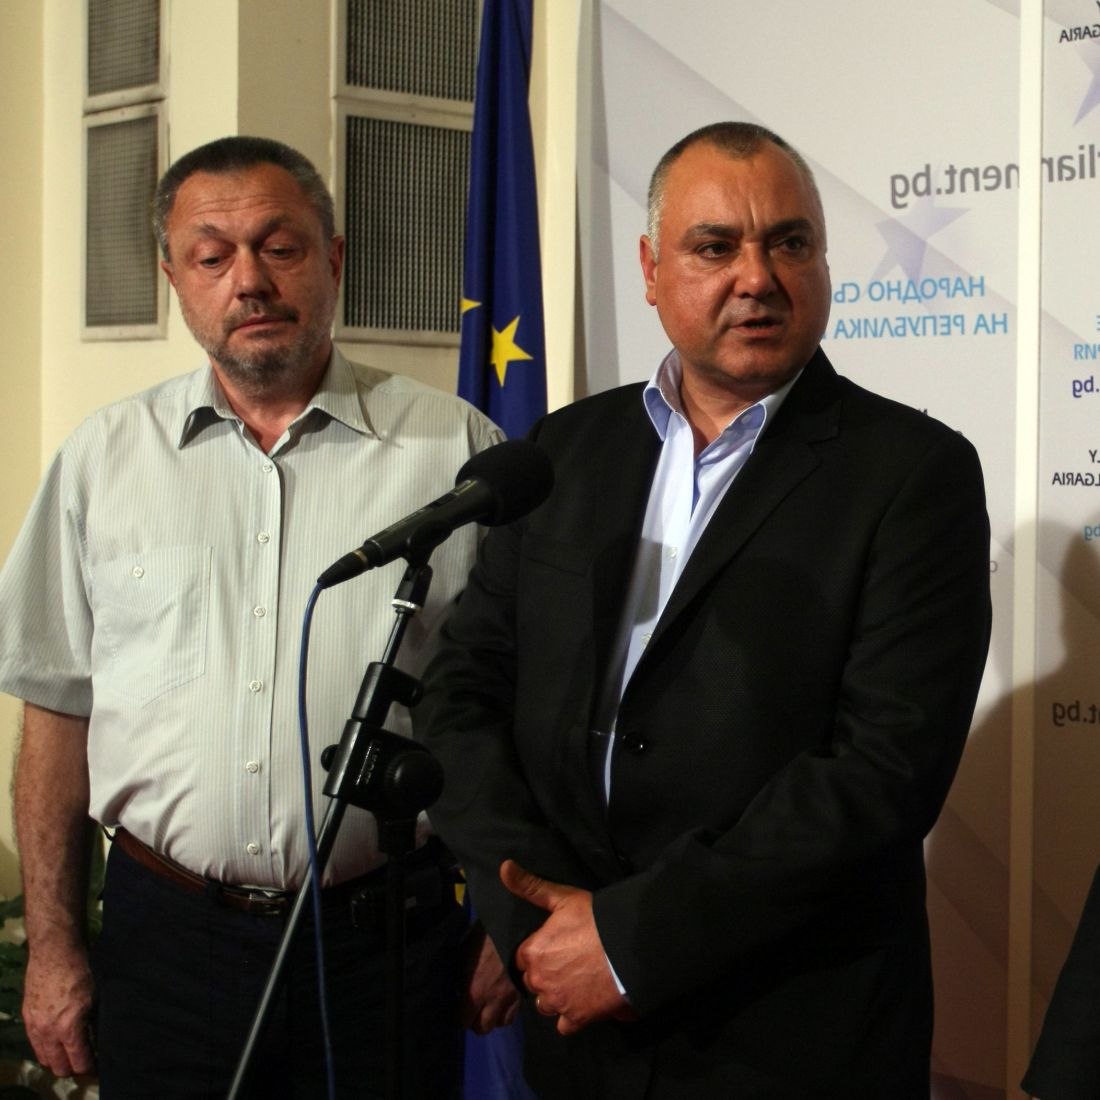 Трима депутати напускат парламентарната група на ”Атака”